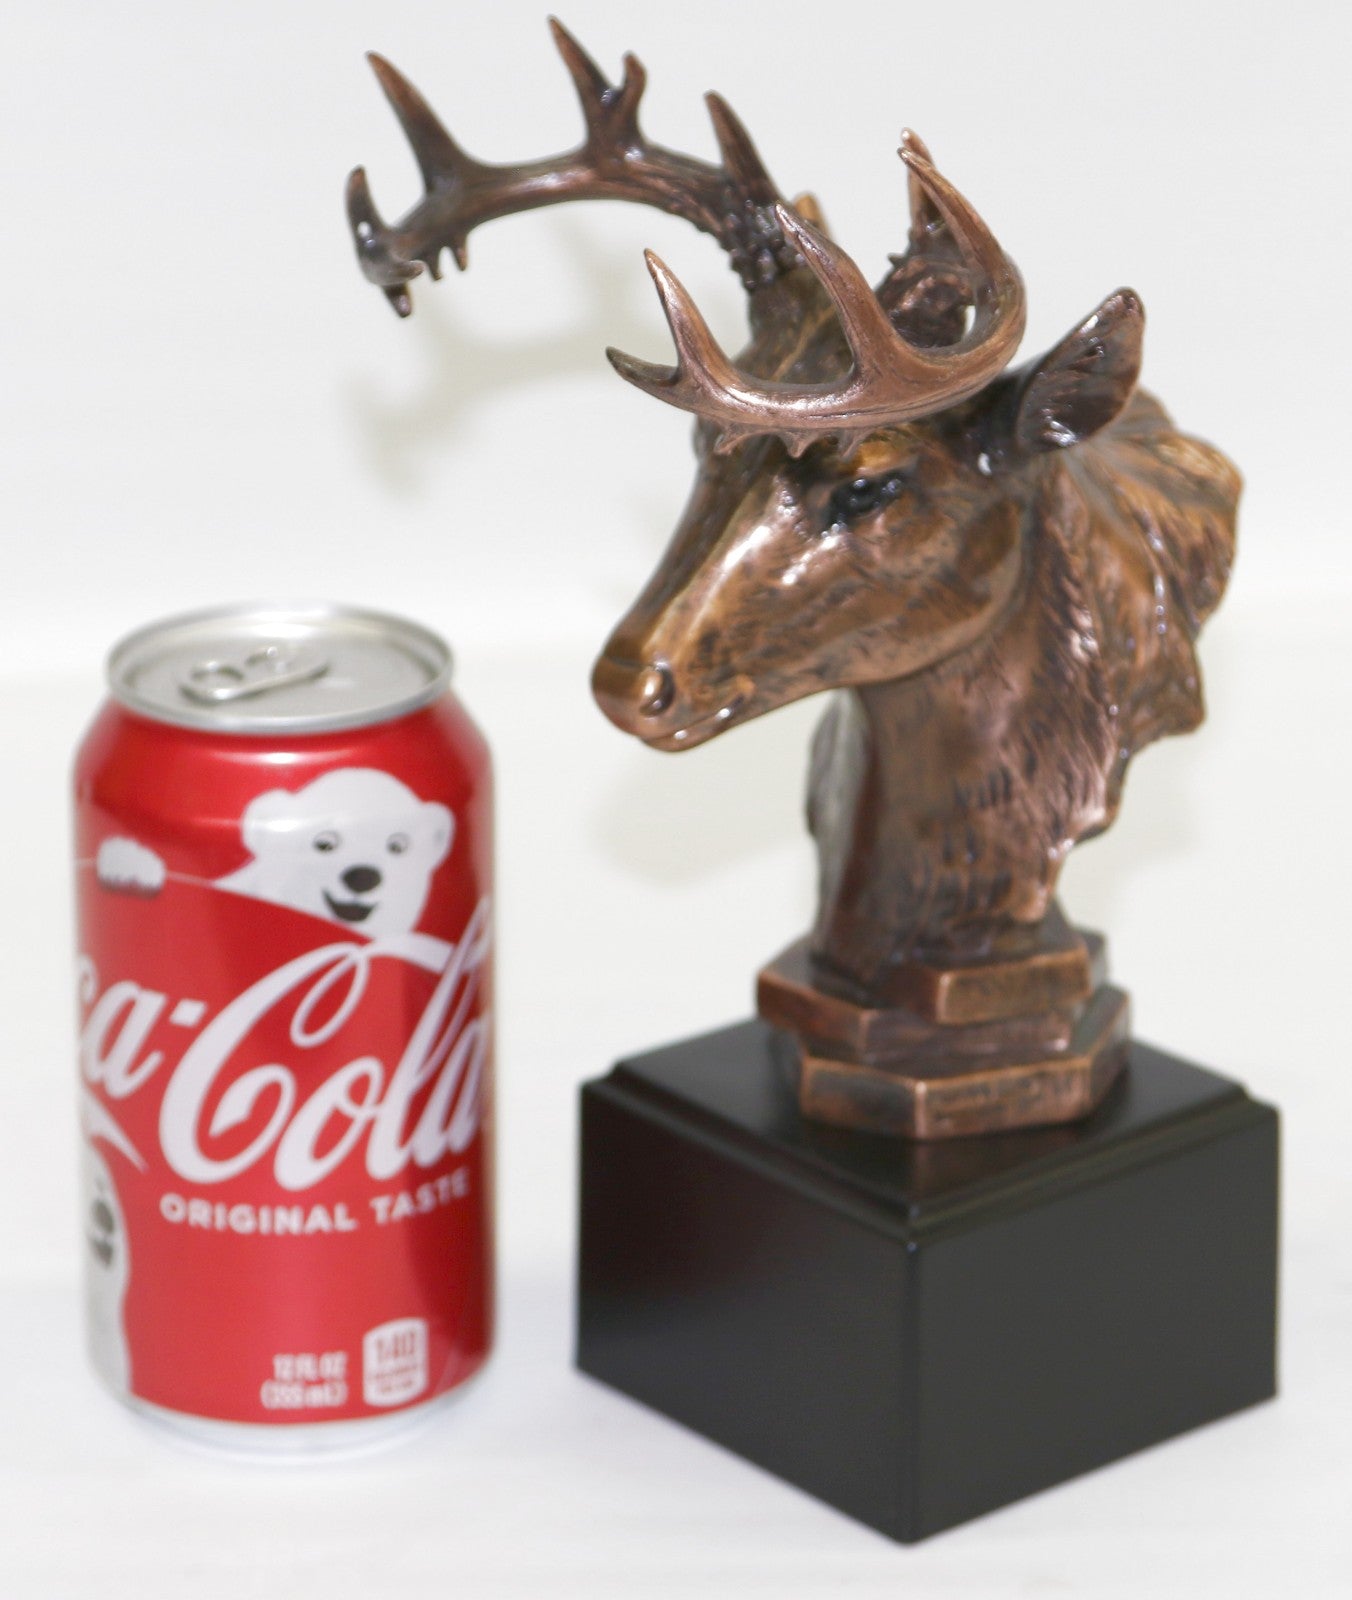 Bronze Stag Ornament, Deer Figure Sculpture Home Decor European Collection Sale